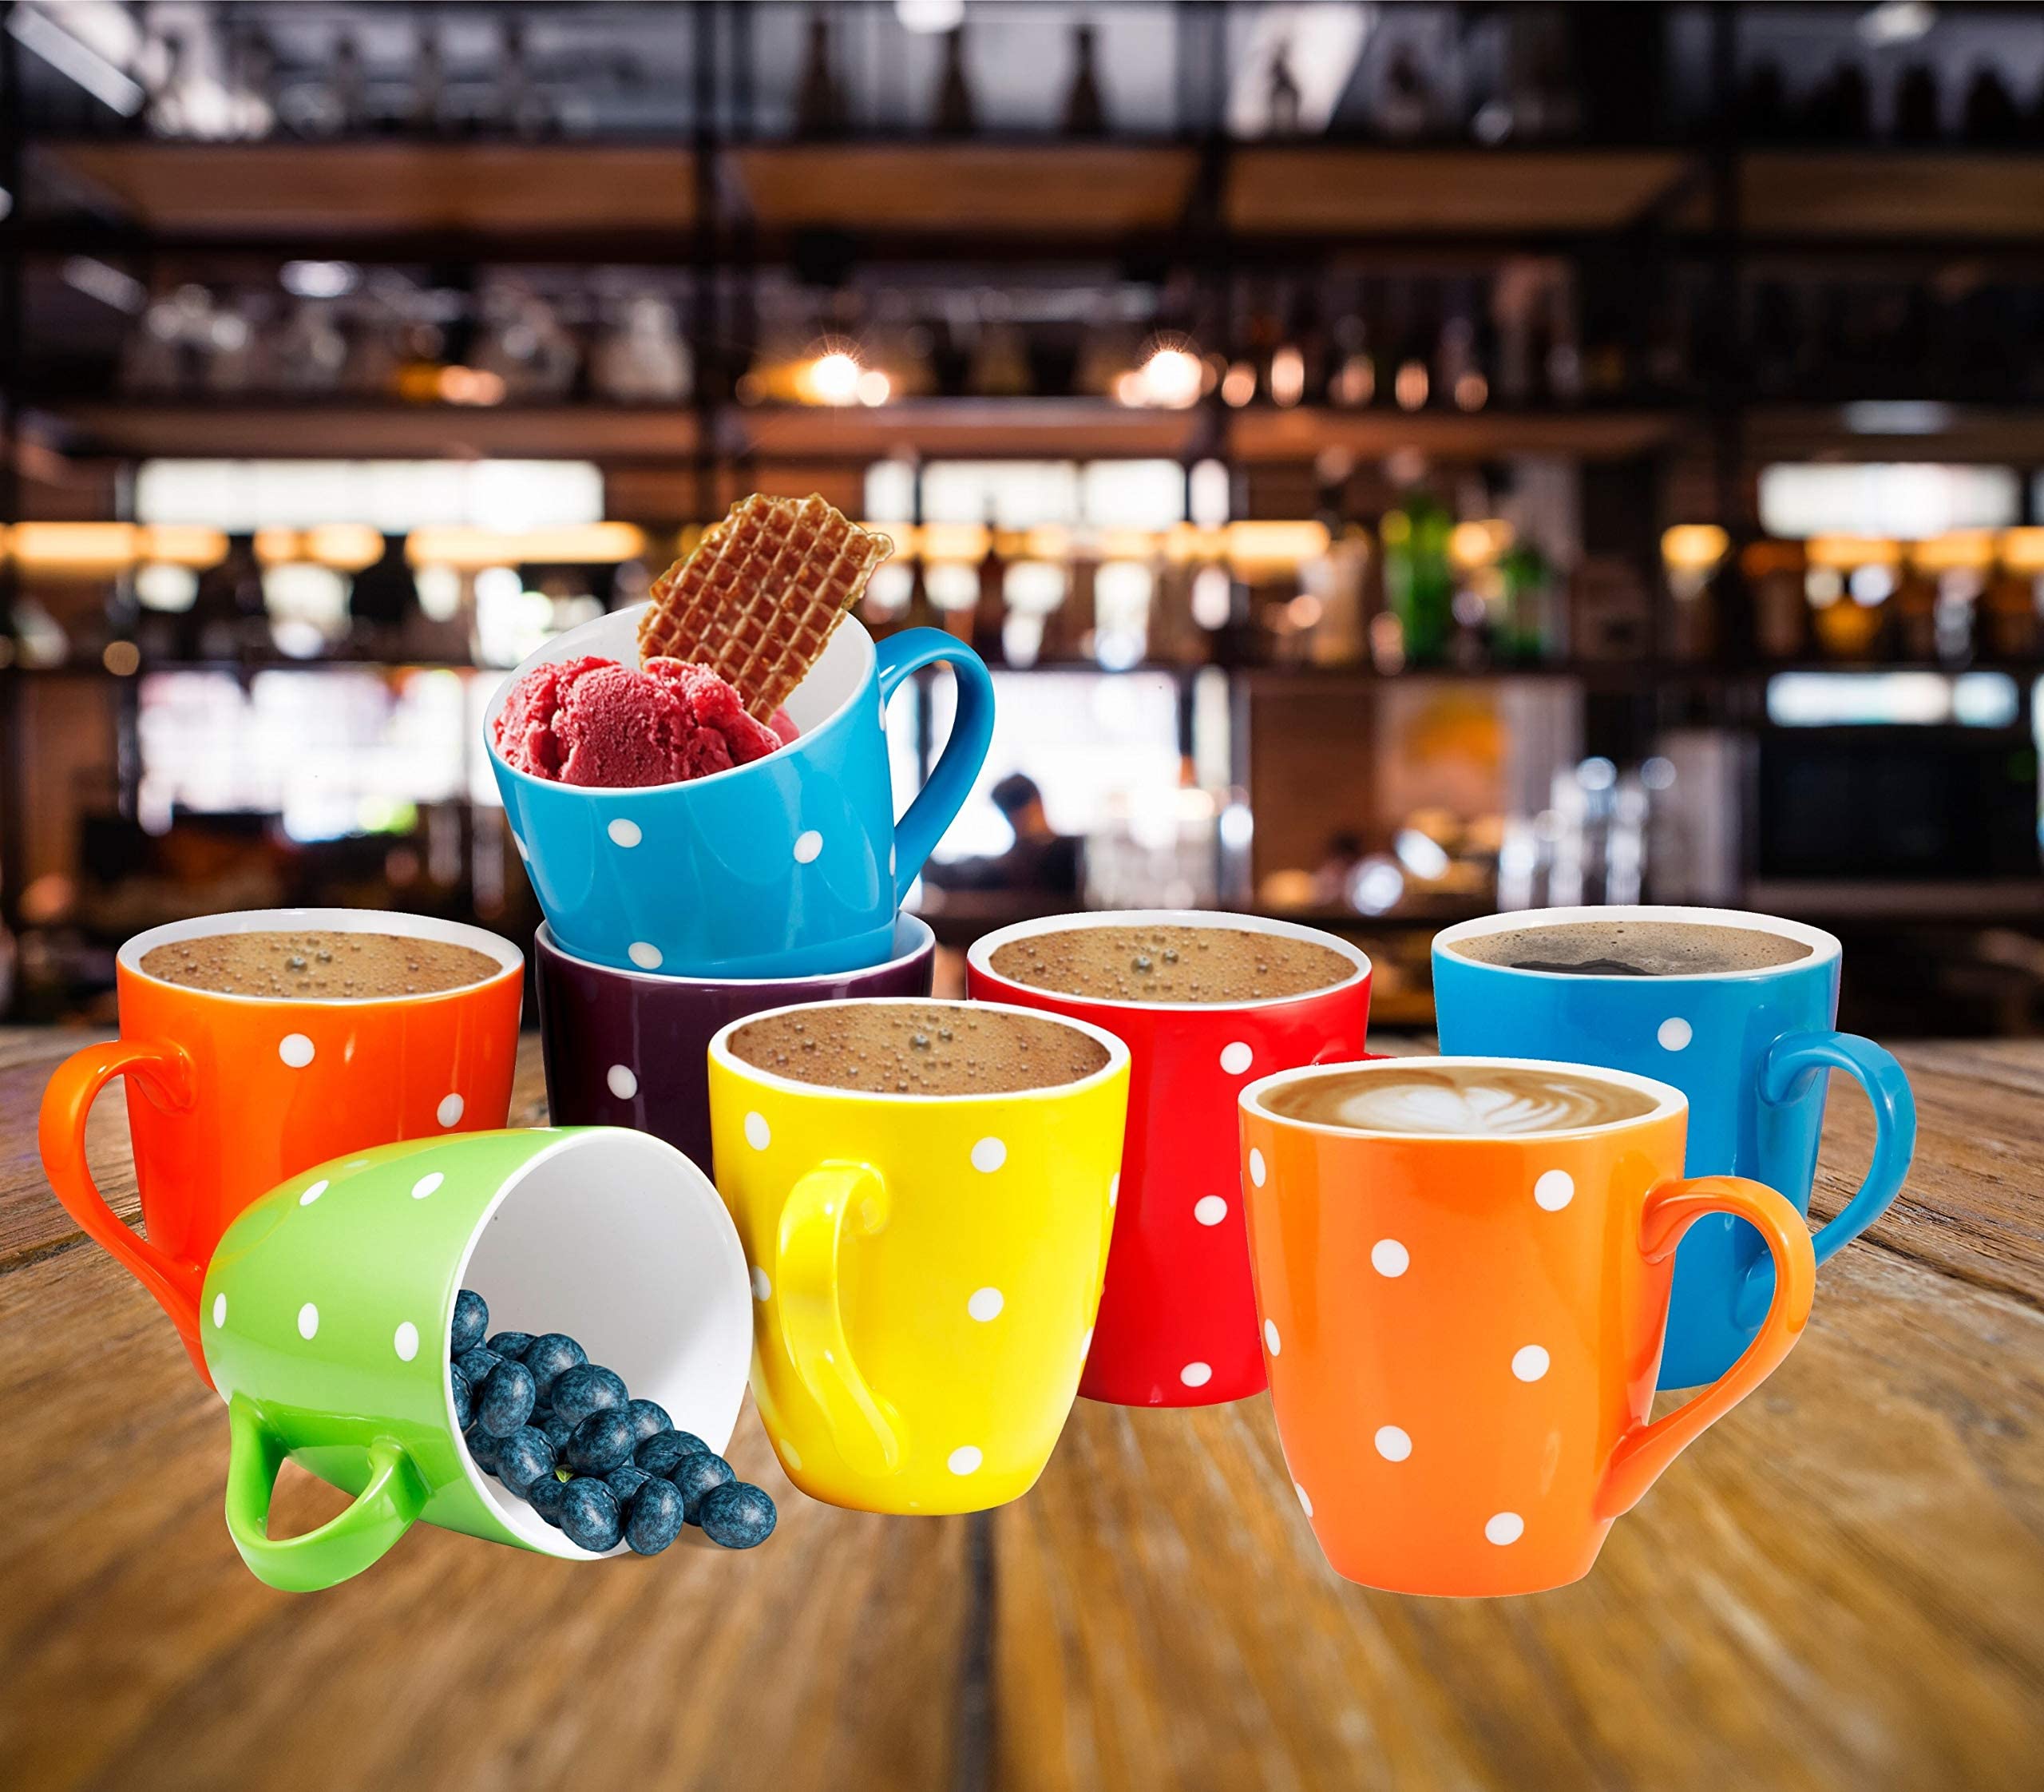 Bruntmor 16 Oz Polka Dot Coffee Mug Set of 6, Large 16 Ounce Ceramic Mugcup Set In Multi Color Dot Design, Best Coffee Mug For Your Christmas Or Birthday Gift